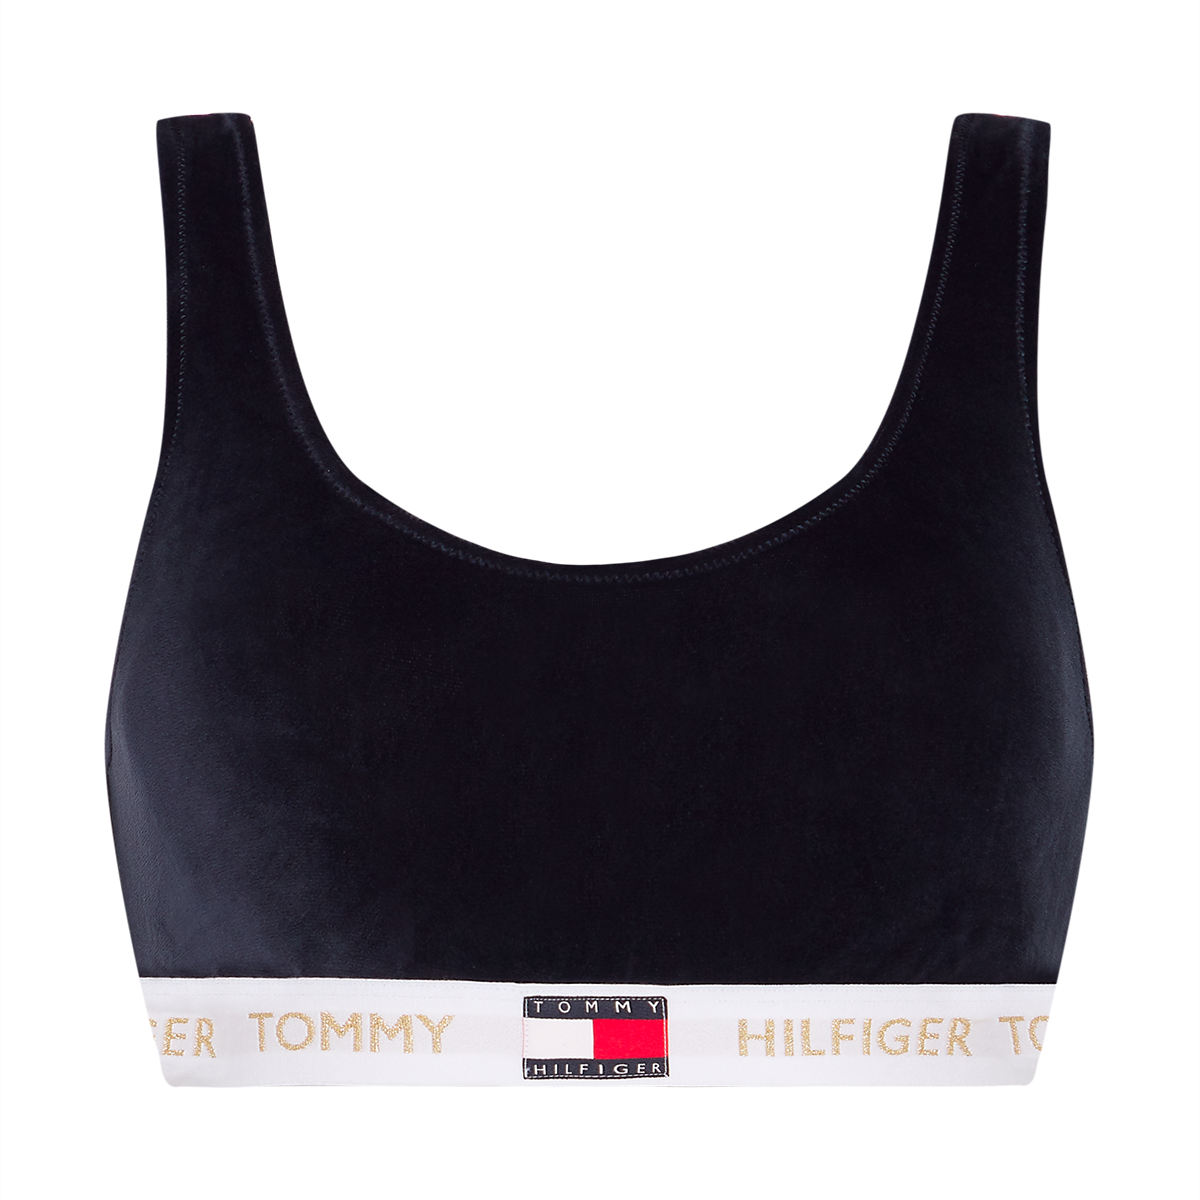 Tommy Hilfiger Lingeri Bralette Velour Bikini Top, Farve: Sort, Størrelse: S, Dame